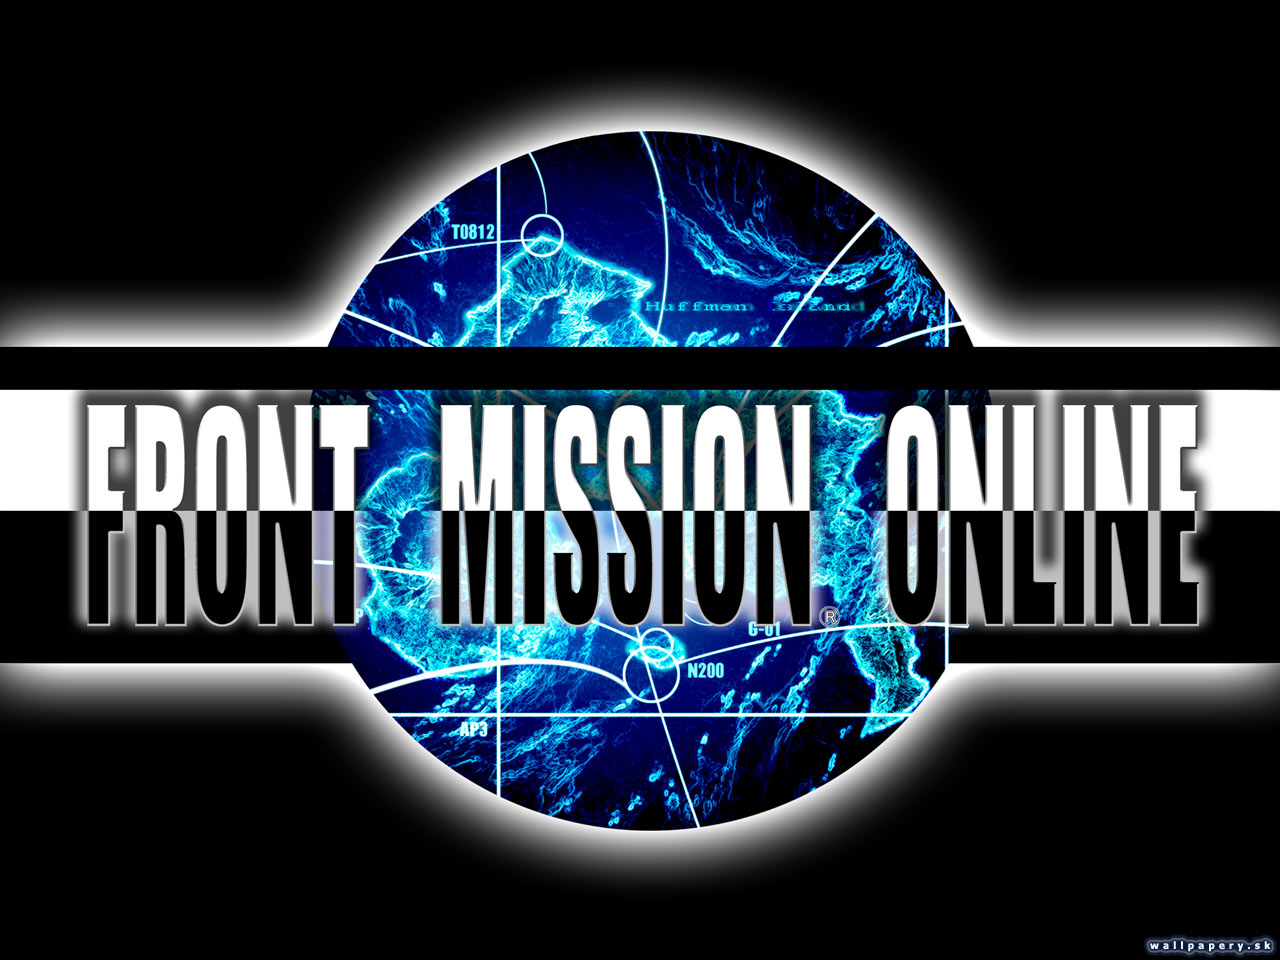 Front Mission Online - wallpaper 6